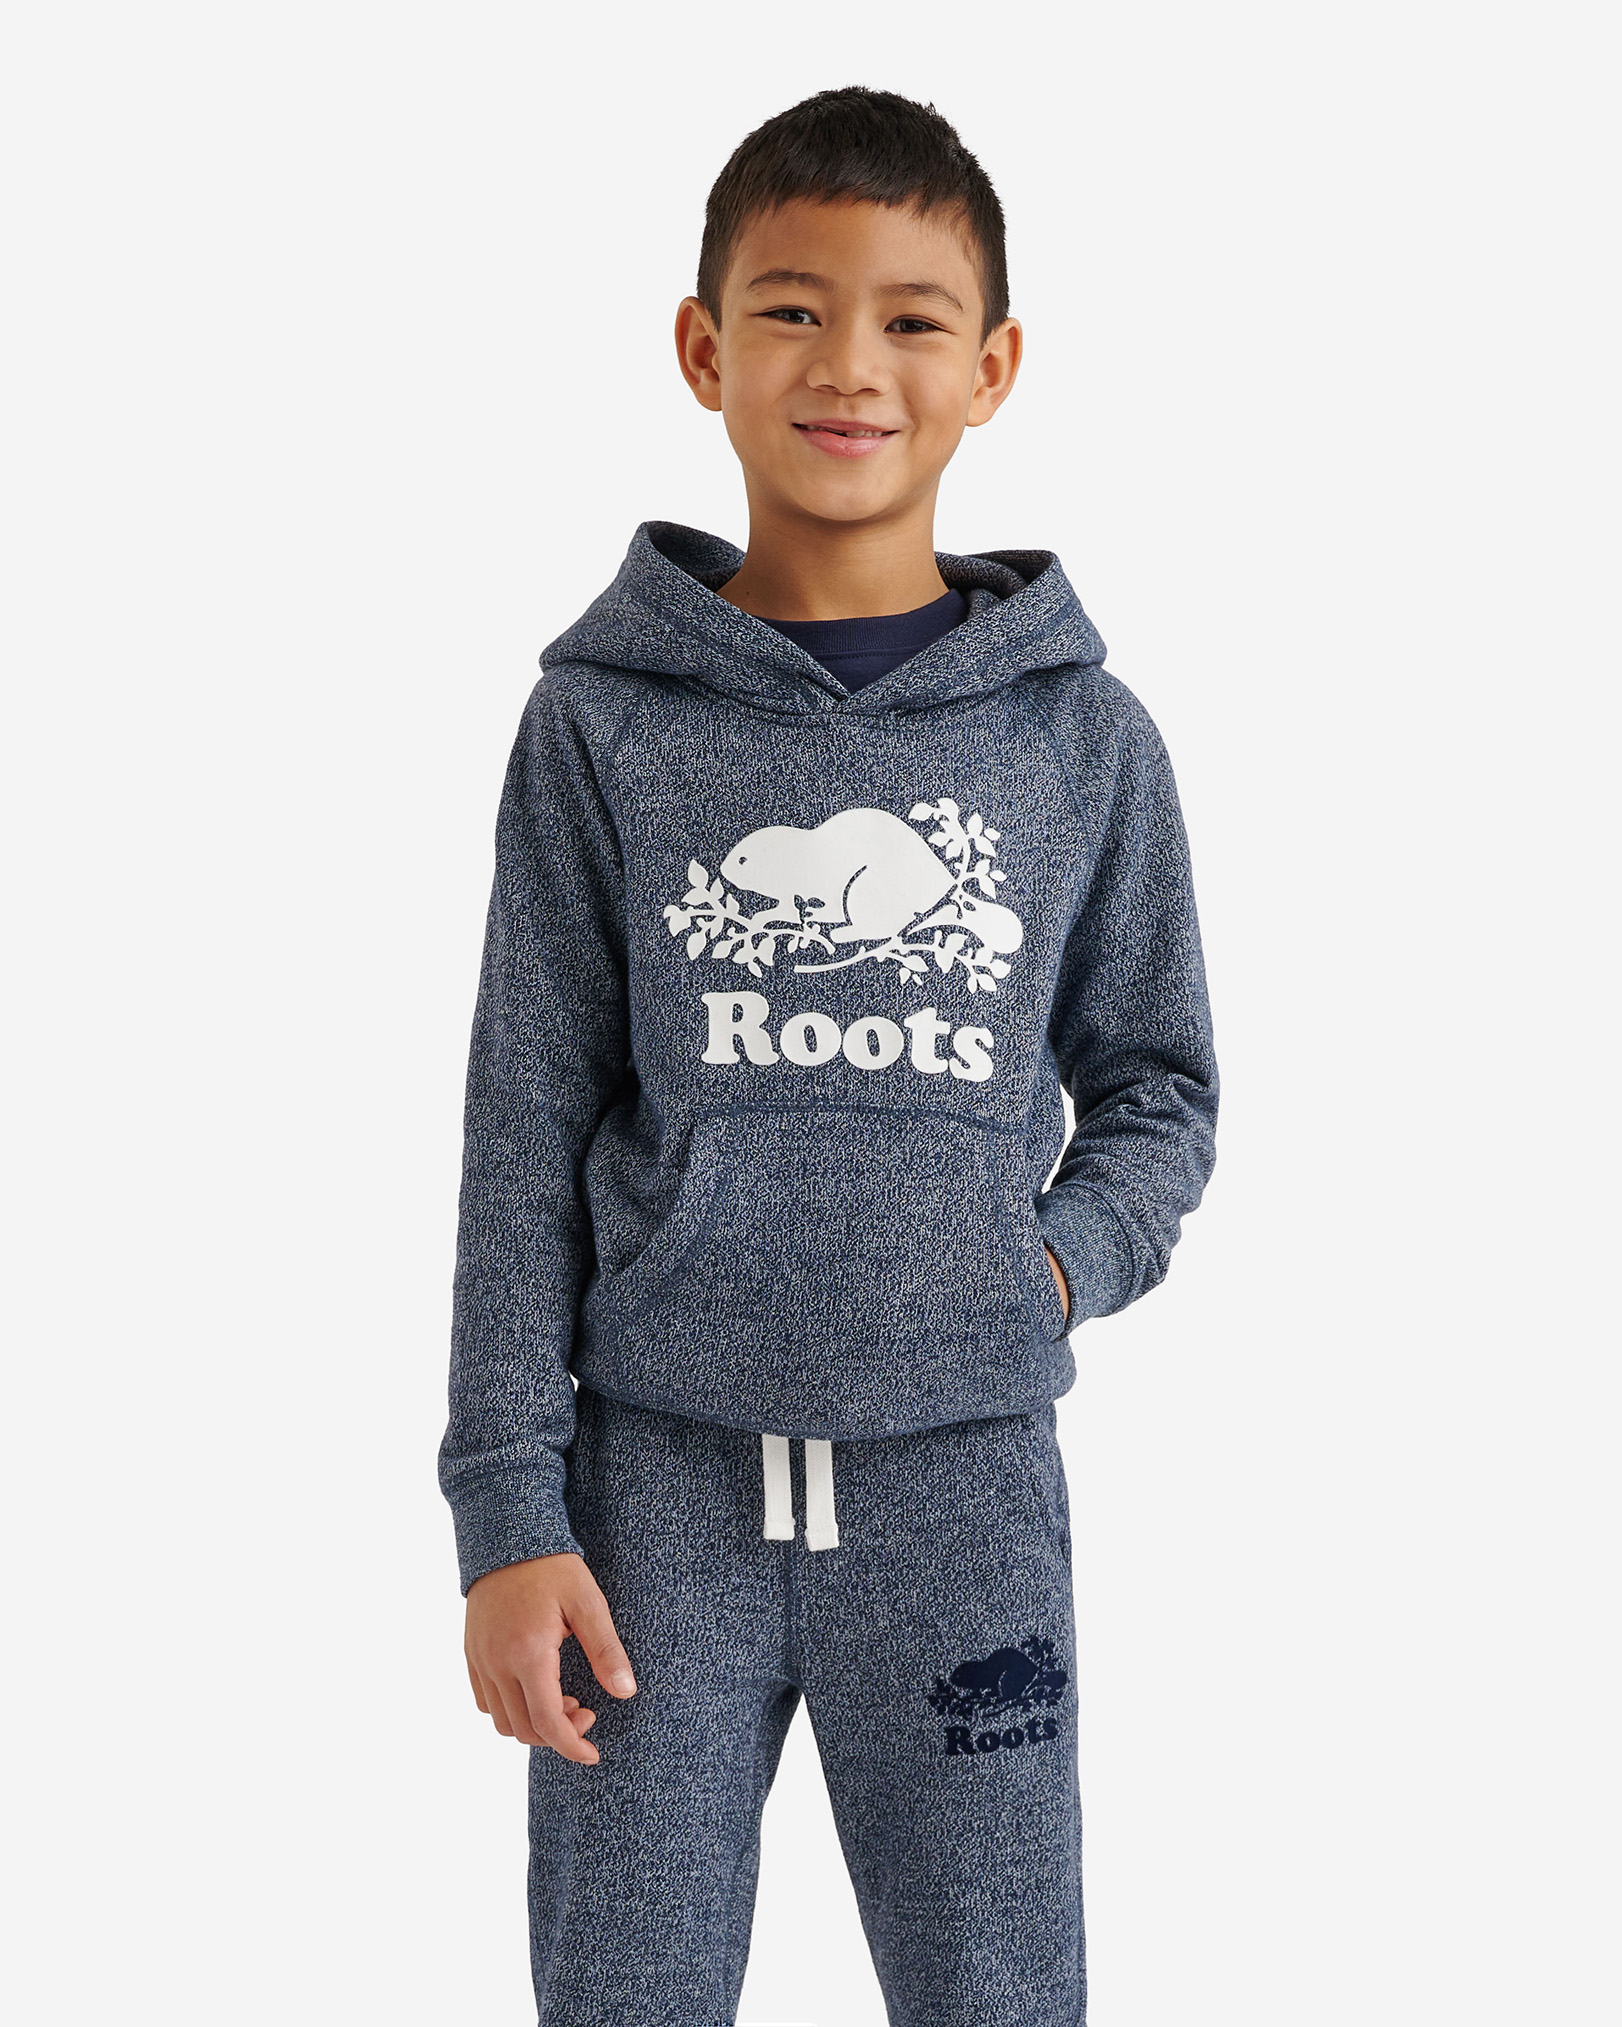 Roots Kids Organic Original Kanga Hoodie Jacket in Navy Blazer Pepper